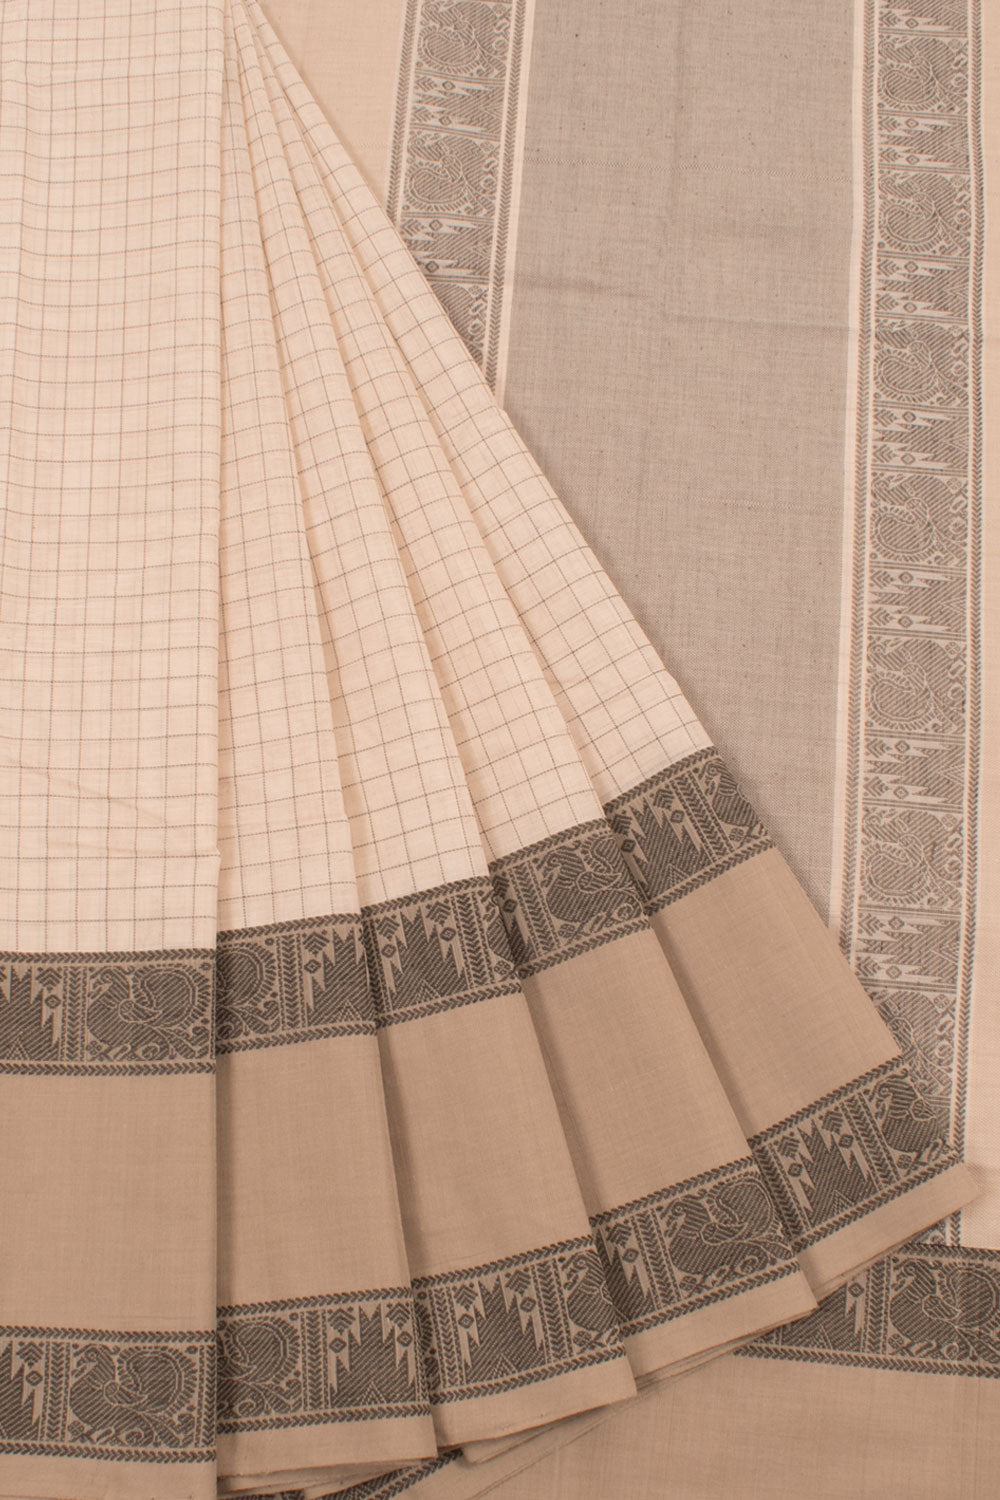 Handwoven Kanchi Cotton Saree with Check Design and Peacock Border